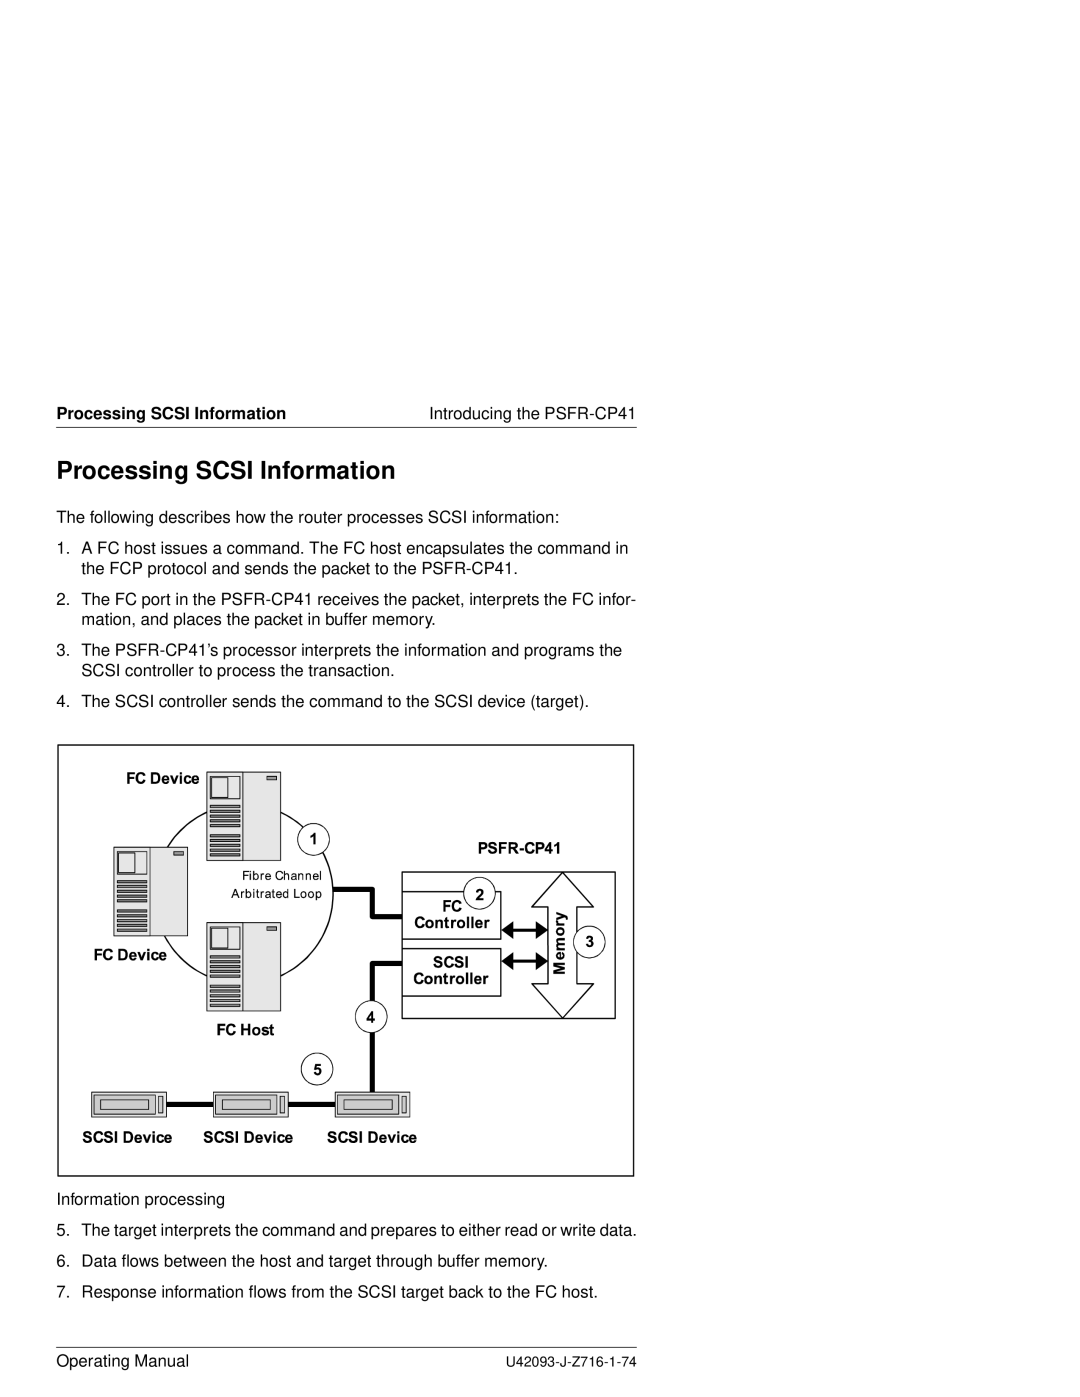 Siemens PSFR-CP41 manual Processing Scsi Information 